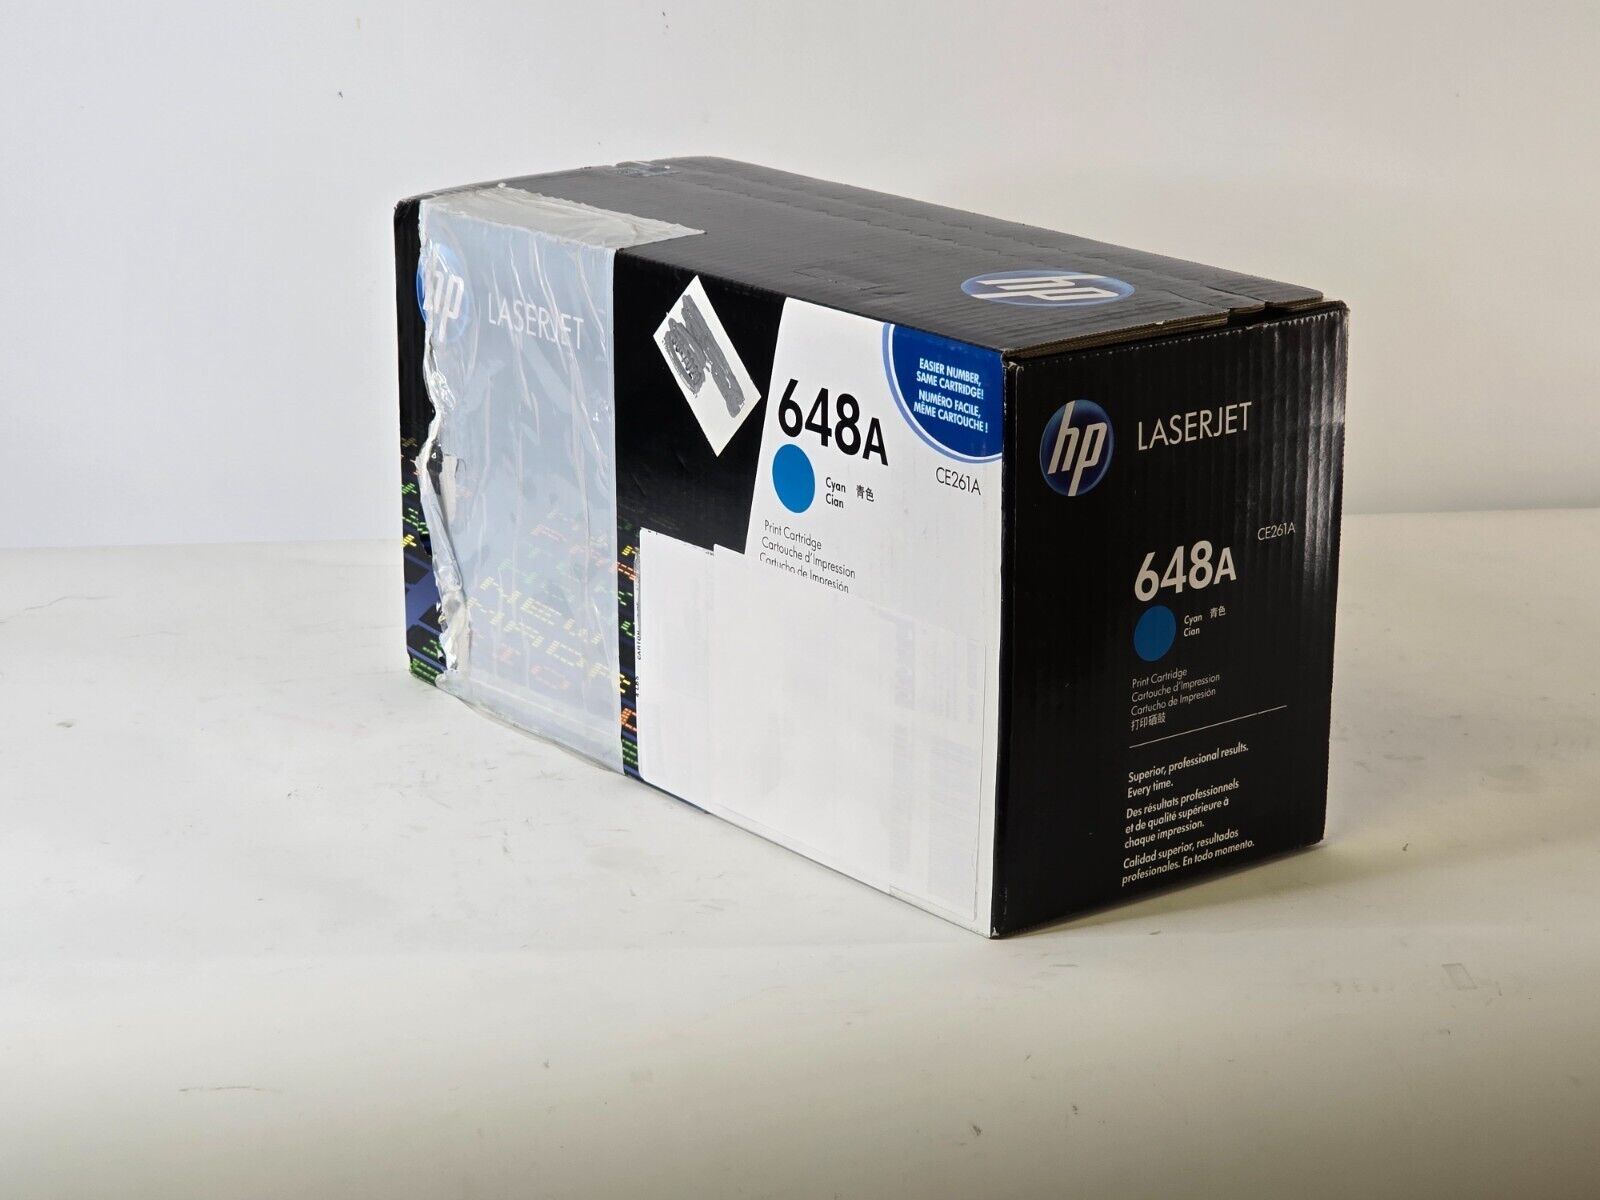 HP 648A (CE261A) Cyan LaserJet Toner Cartridge New, imperfect box